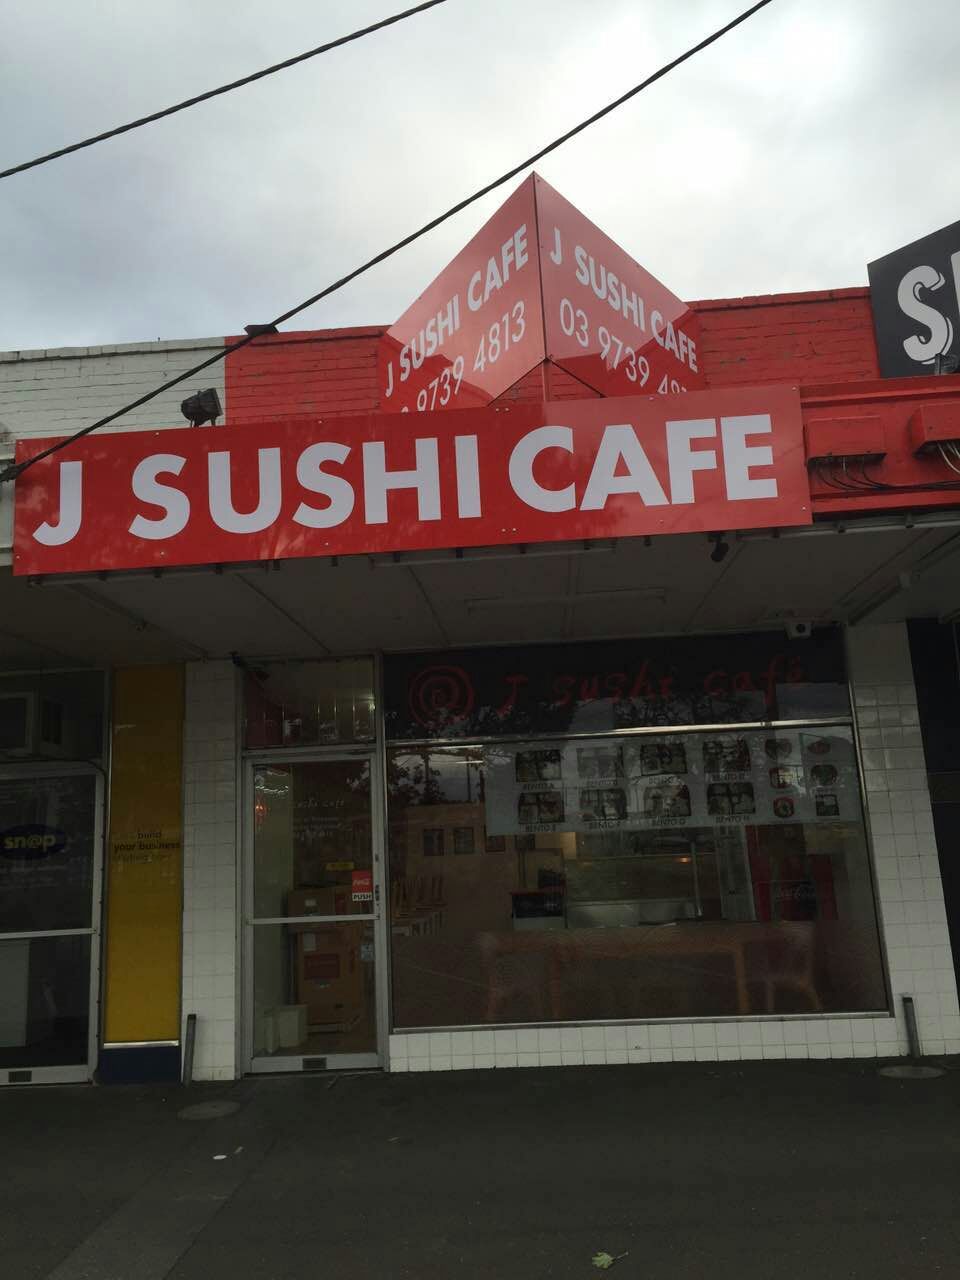 J Sushi Cafe | 98 Main St, Lilydale VIC 3140, Australia | Phone: (03) 9739 4813